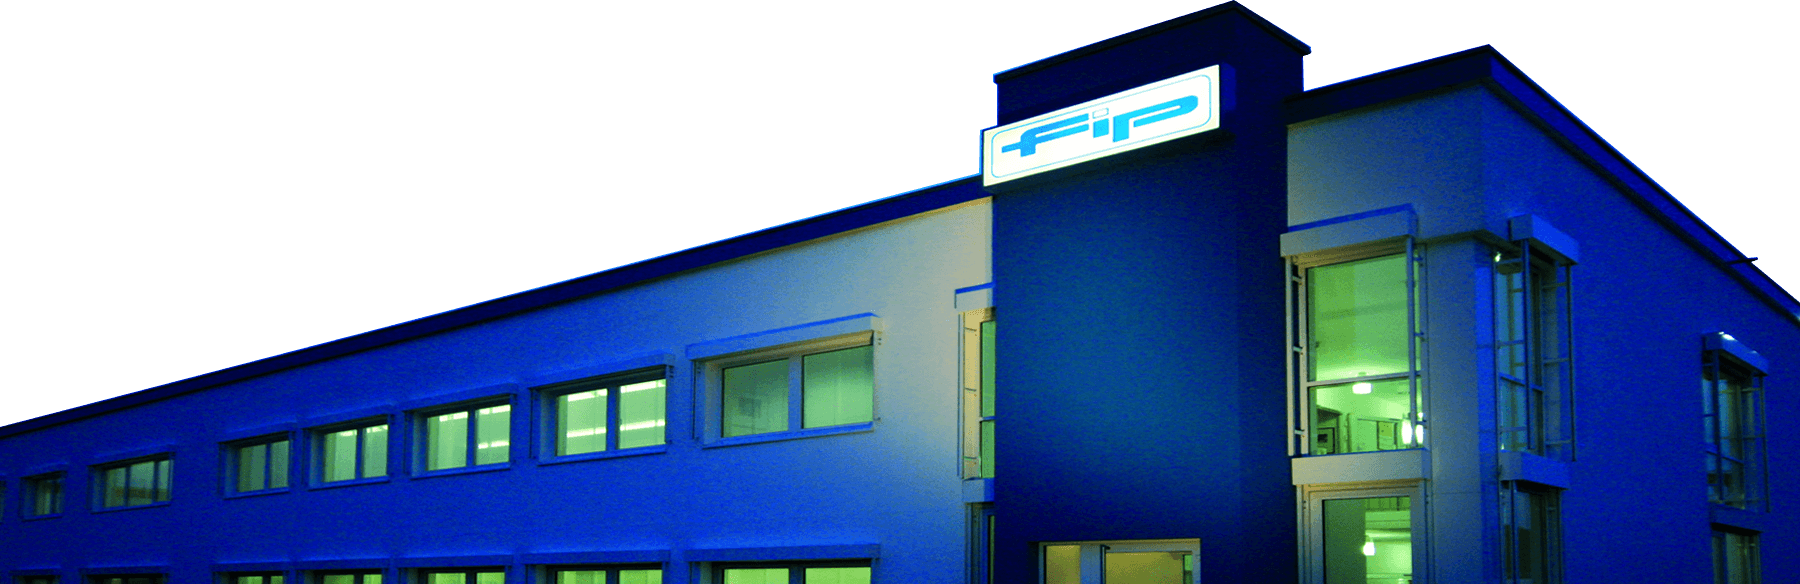 Fip-Gebäude